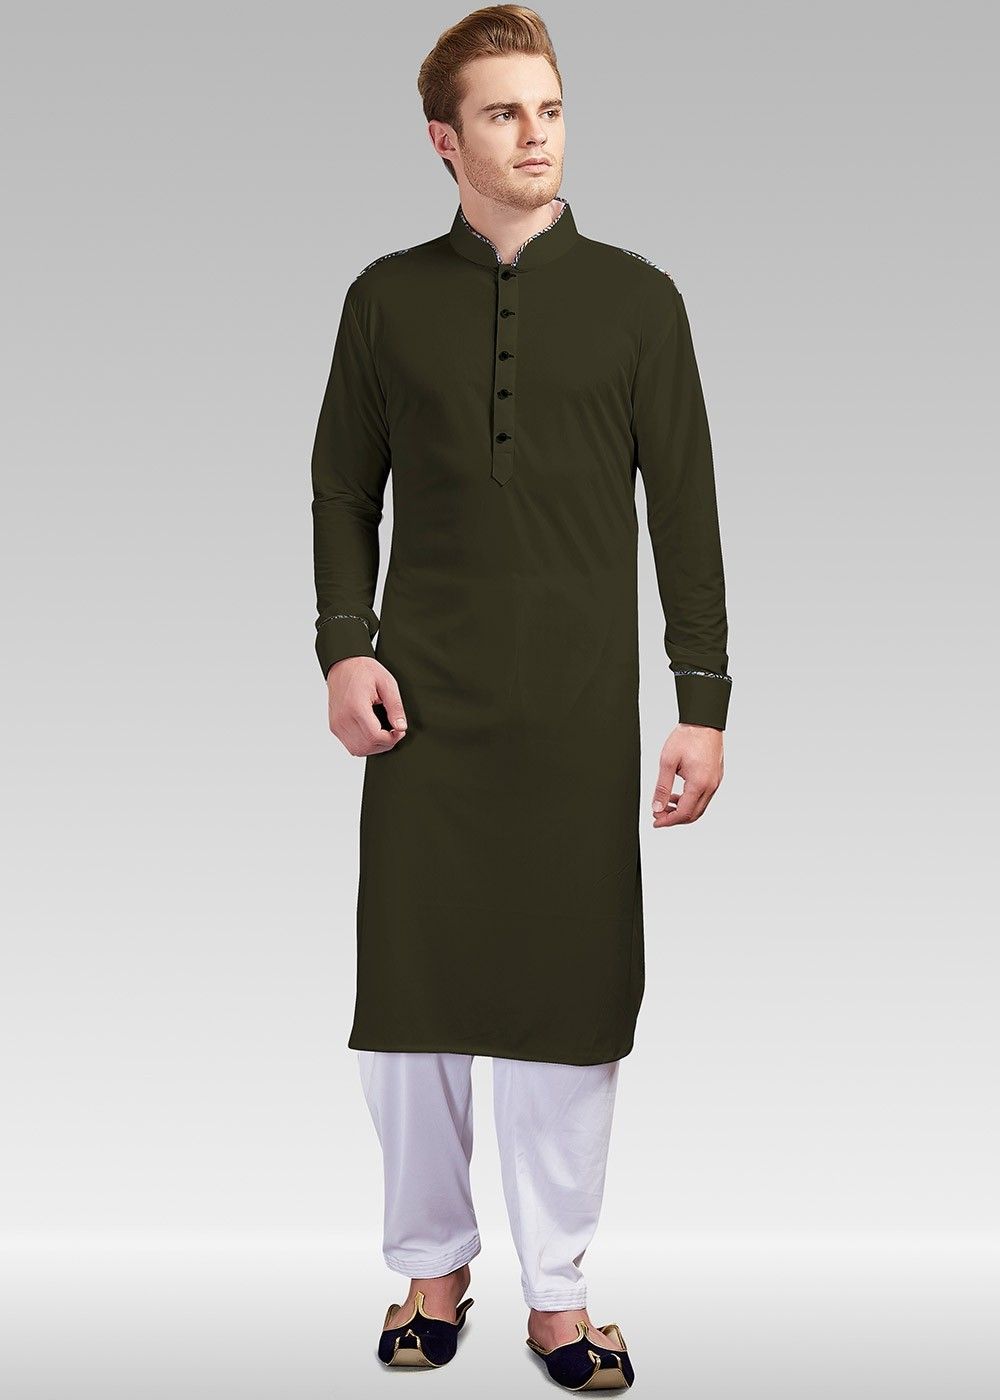 Cotton Kurta Pajama Pathani Suit at best price in Mumbai | ID: 19271890688